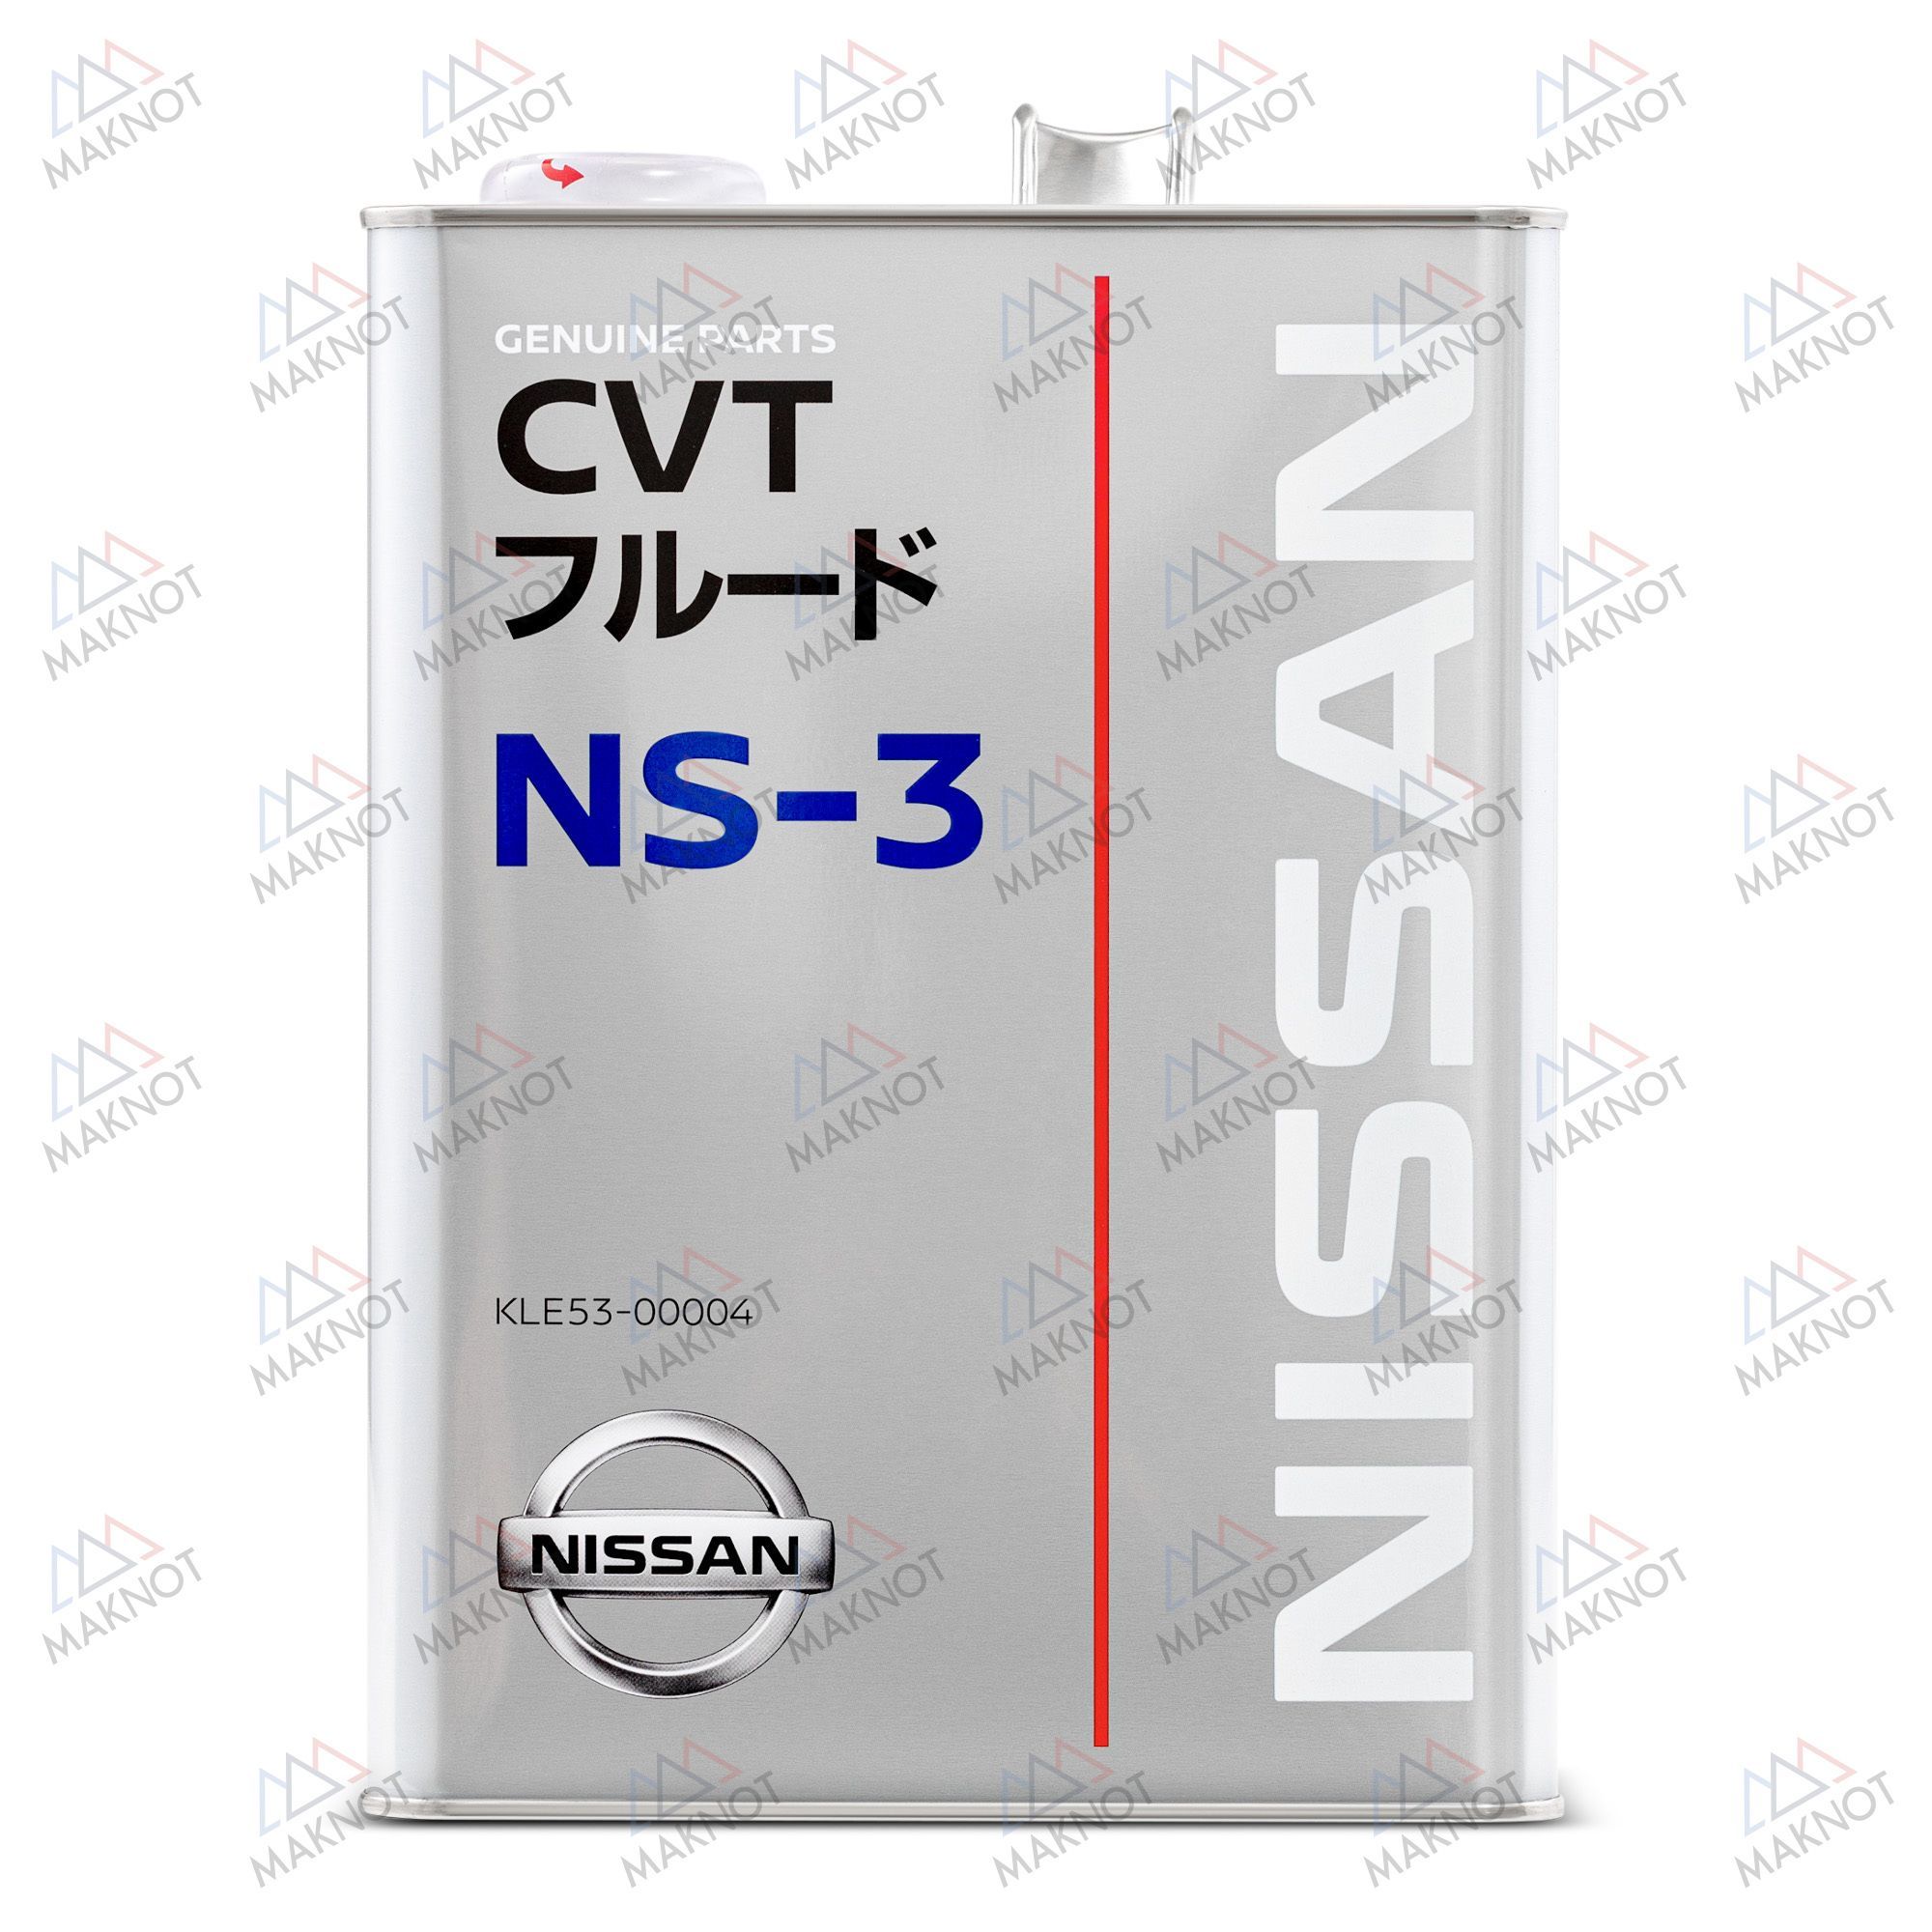 Nissan ns3. Масло Nissan NS-3. Масло Nissan NS-3 синего цвета. Nissan ns3 цвет масла. Масло ниссан 2020